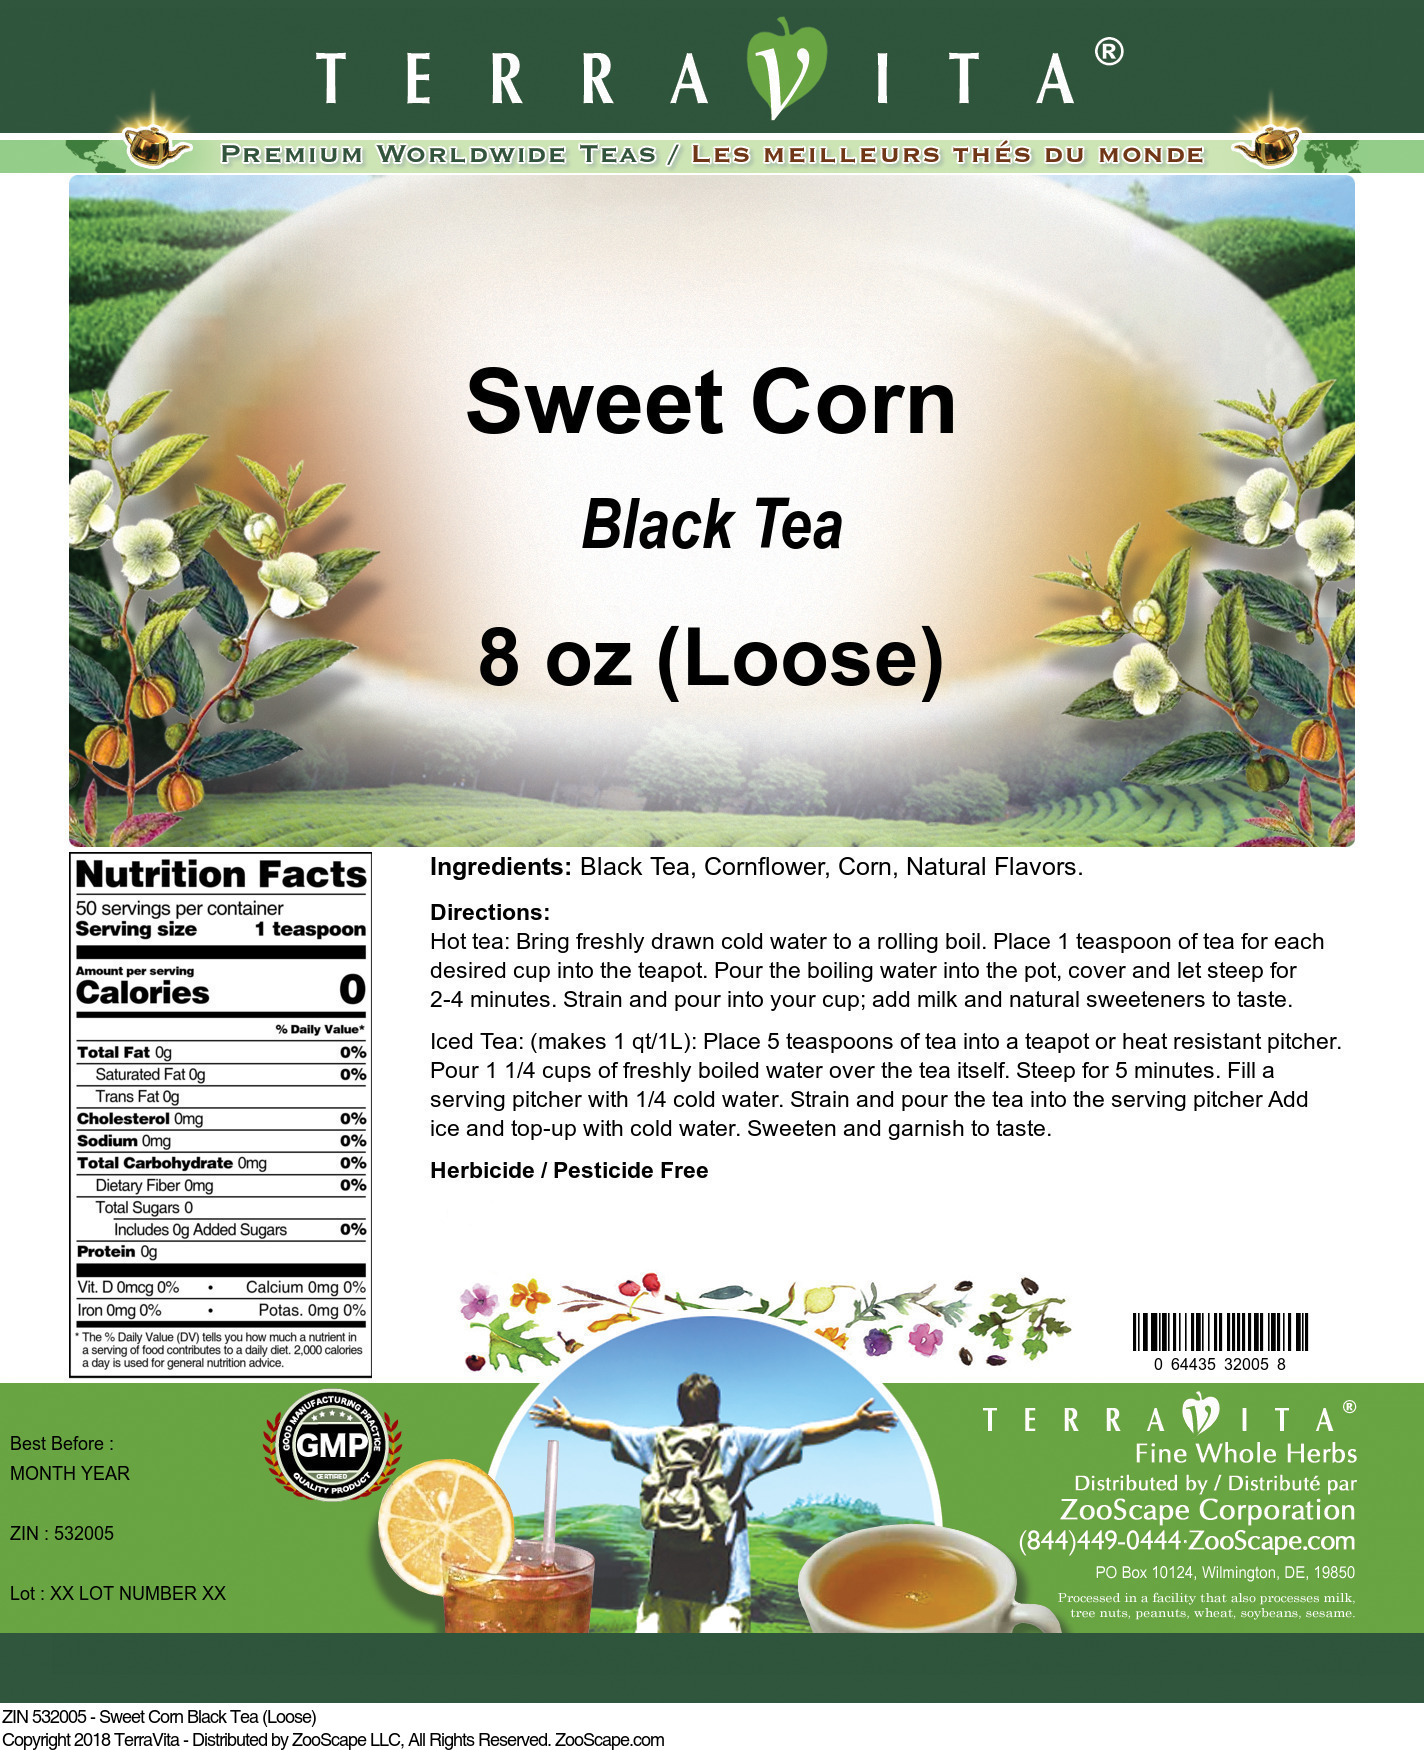 Sweet Corn Black Tea (Loose) - Label